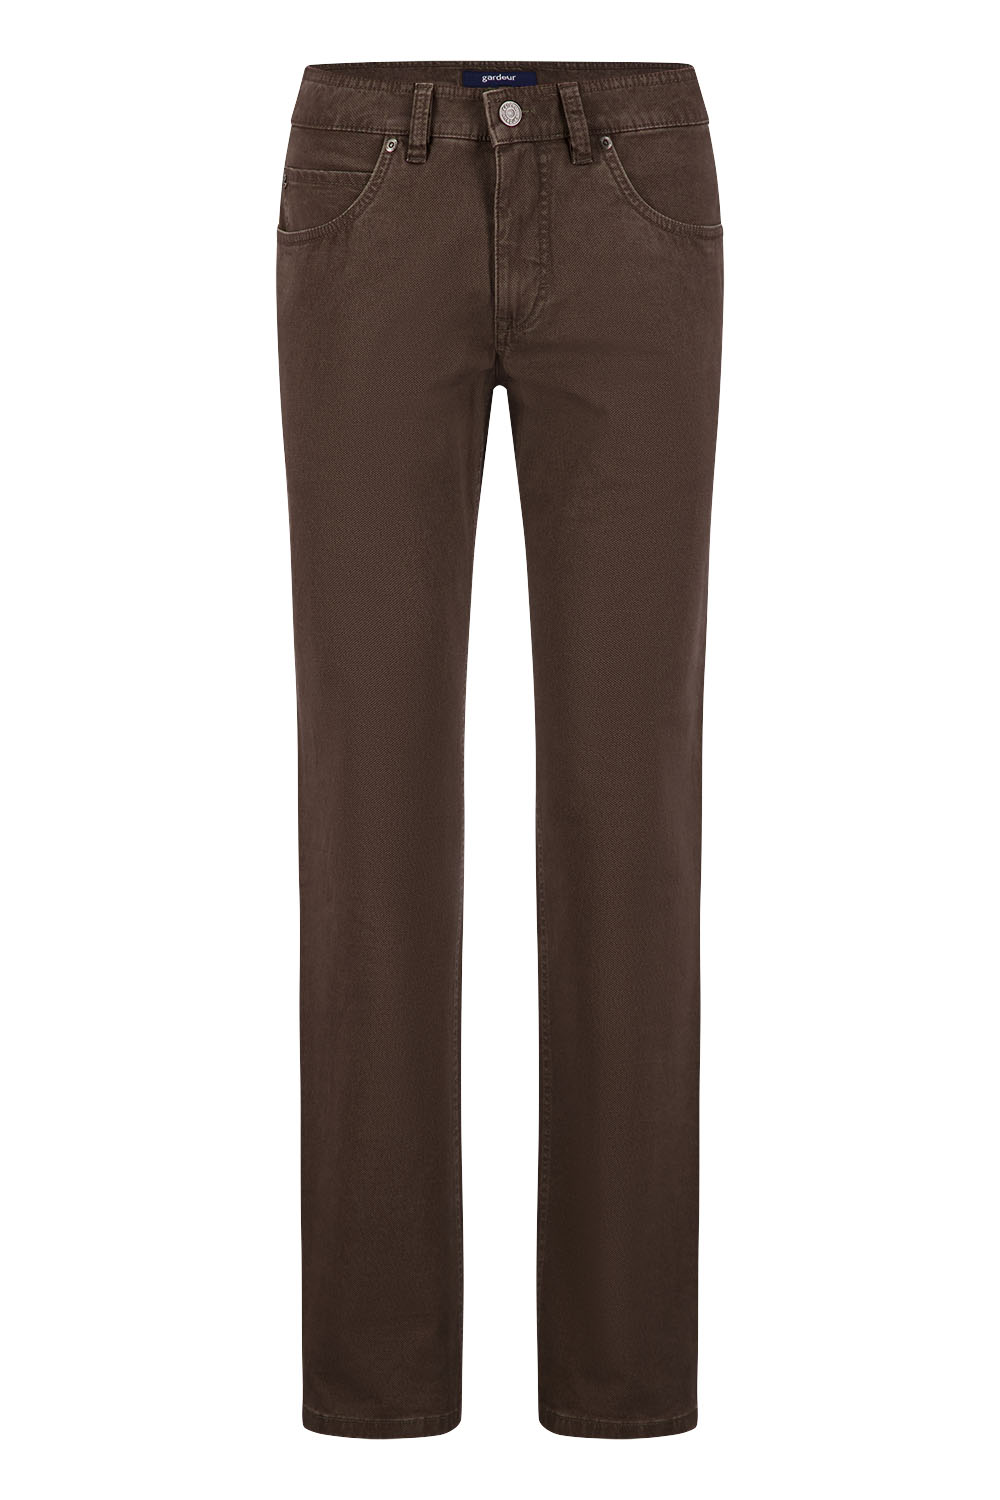 Gardeur - Bill-3 Modern Fit 5-Pocket Jeans Bruin - 34/30 - Heren